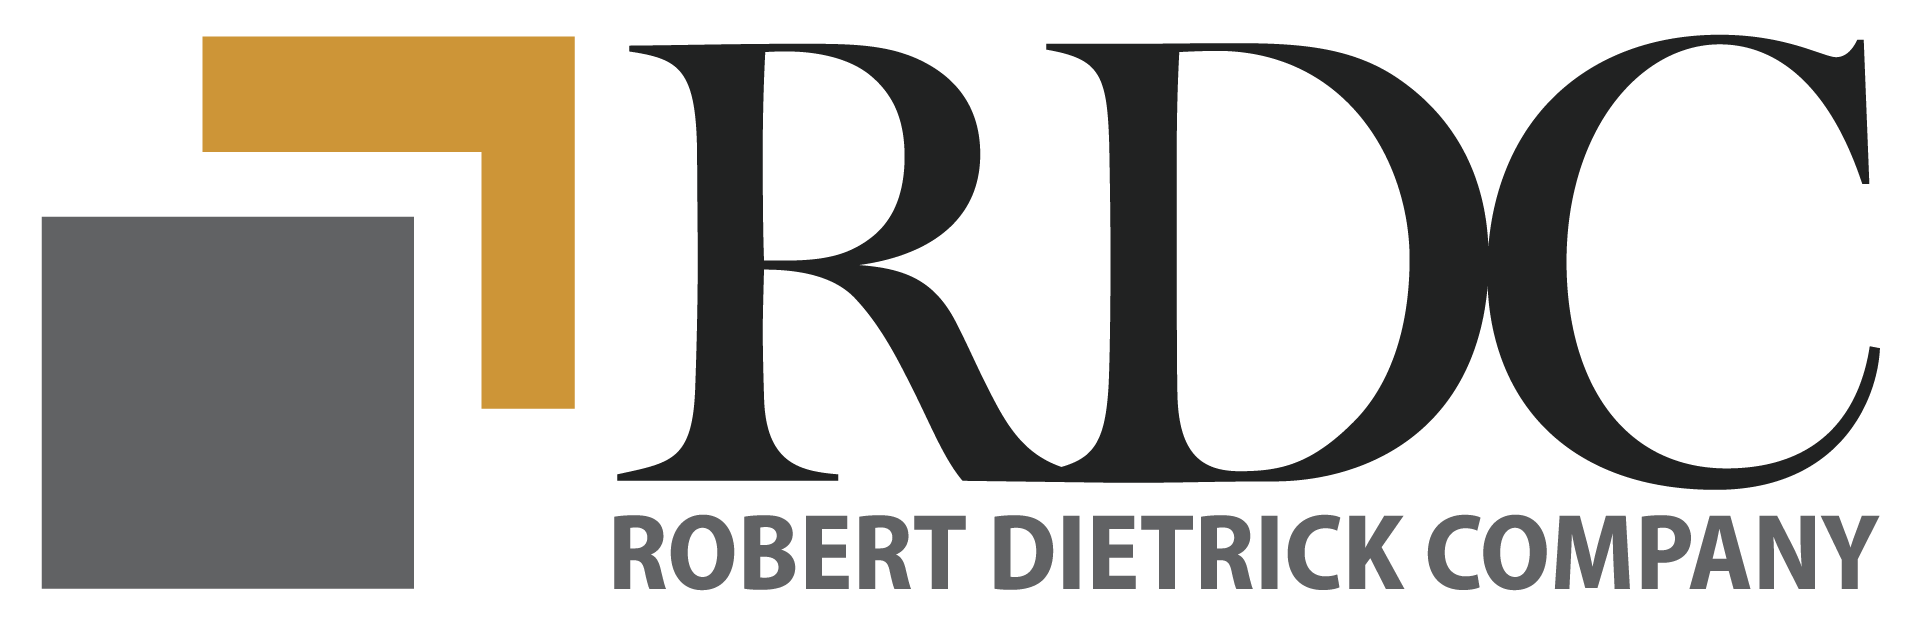 Robert Dietrick Co., Inc. logo